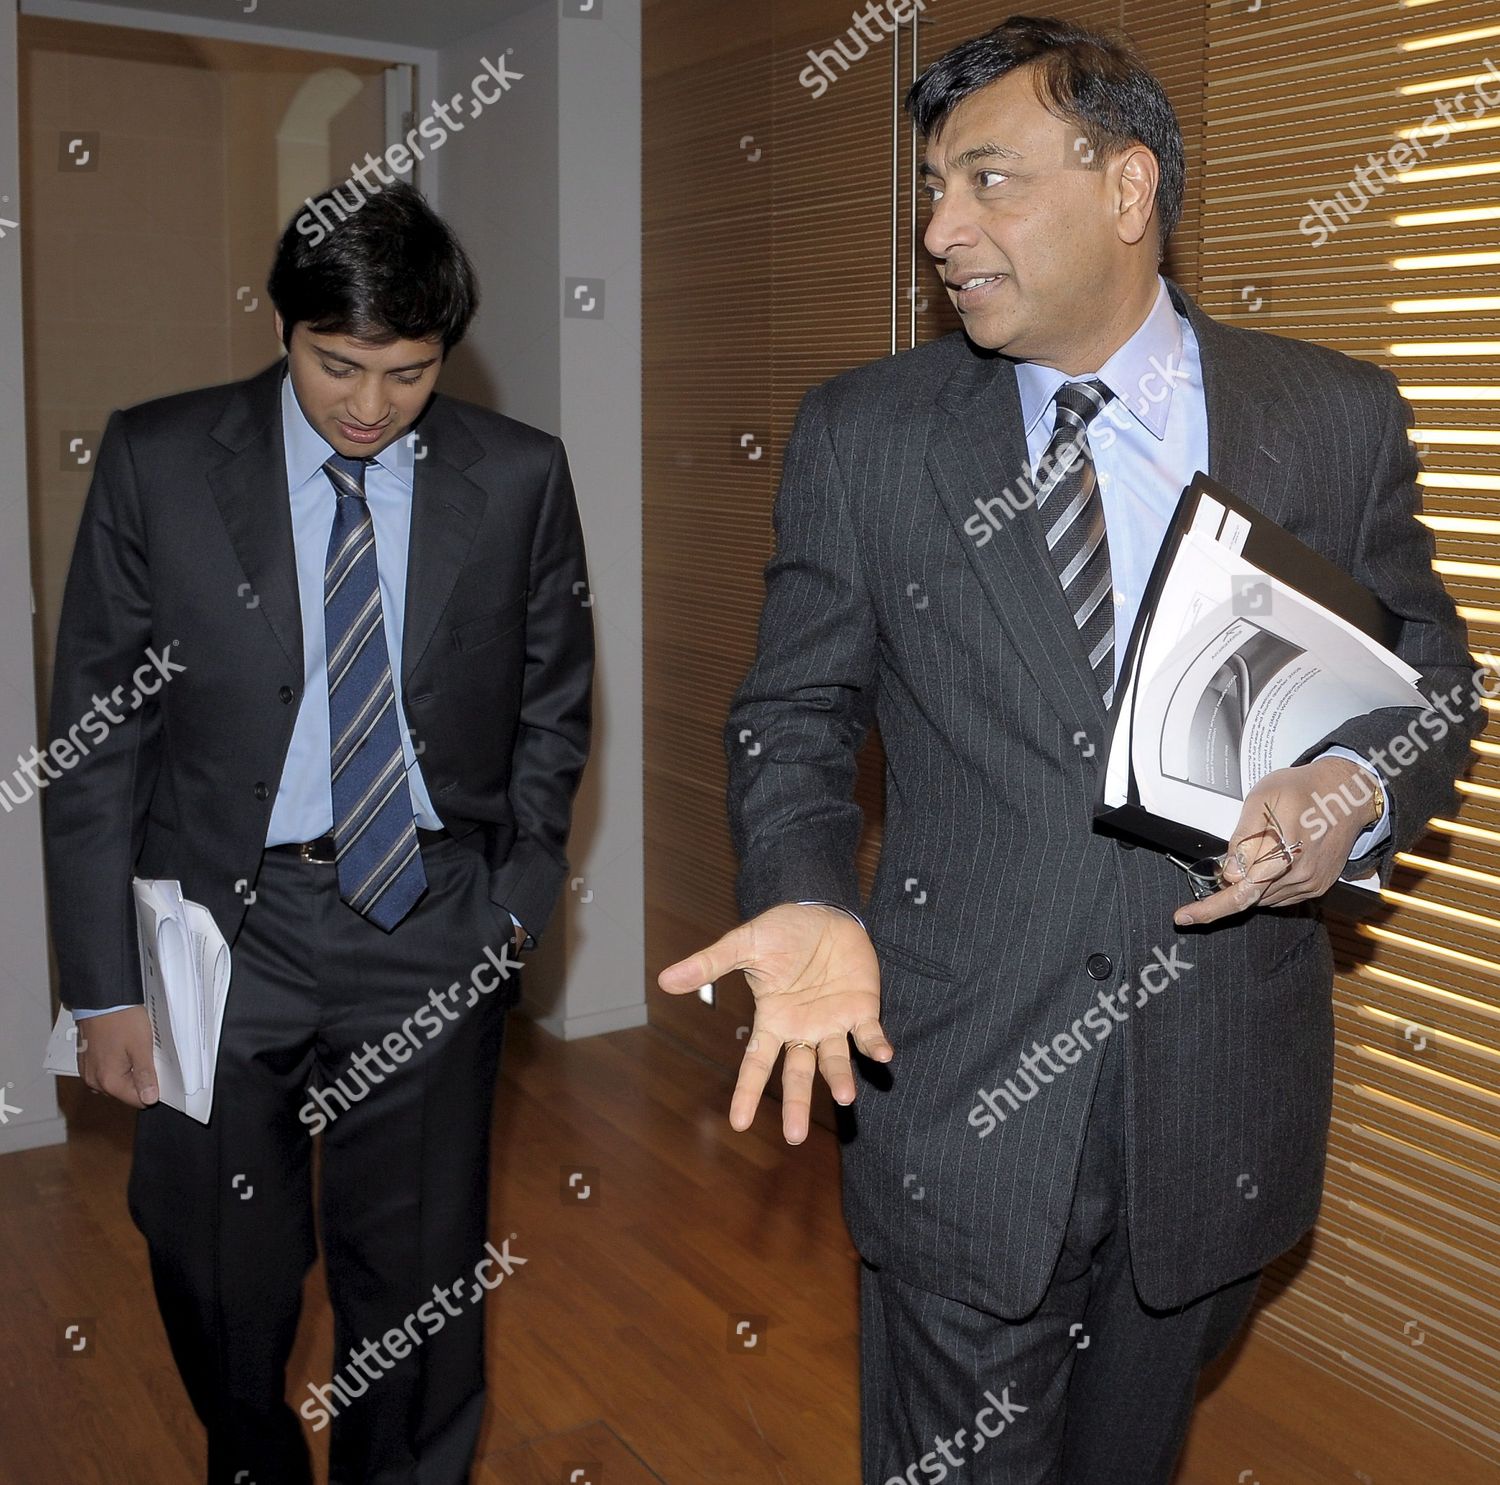 Aditya Mittal - Patent Attorney - L. S. Davar & Co.